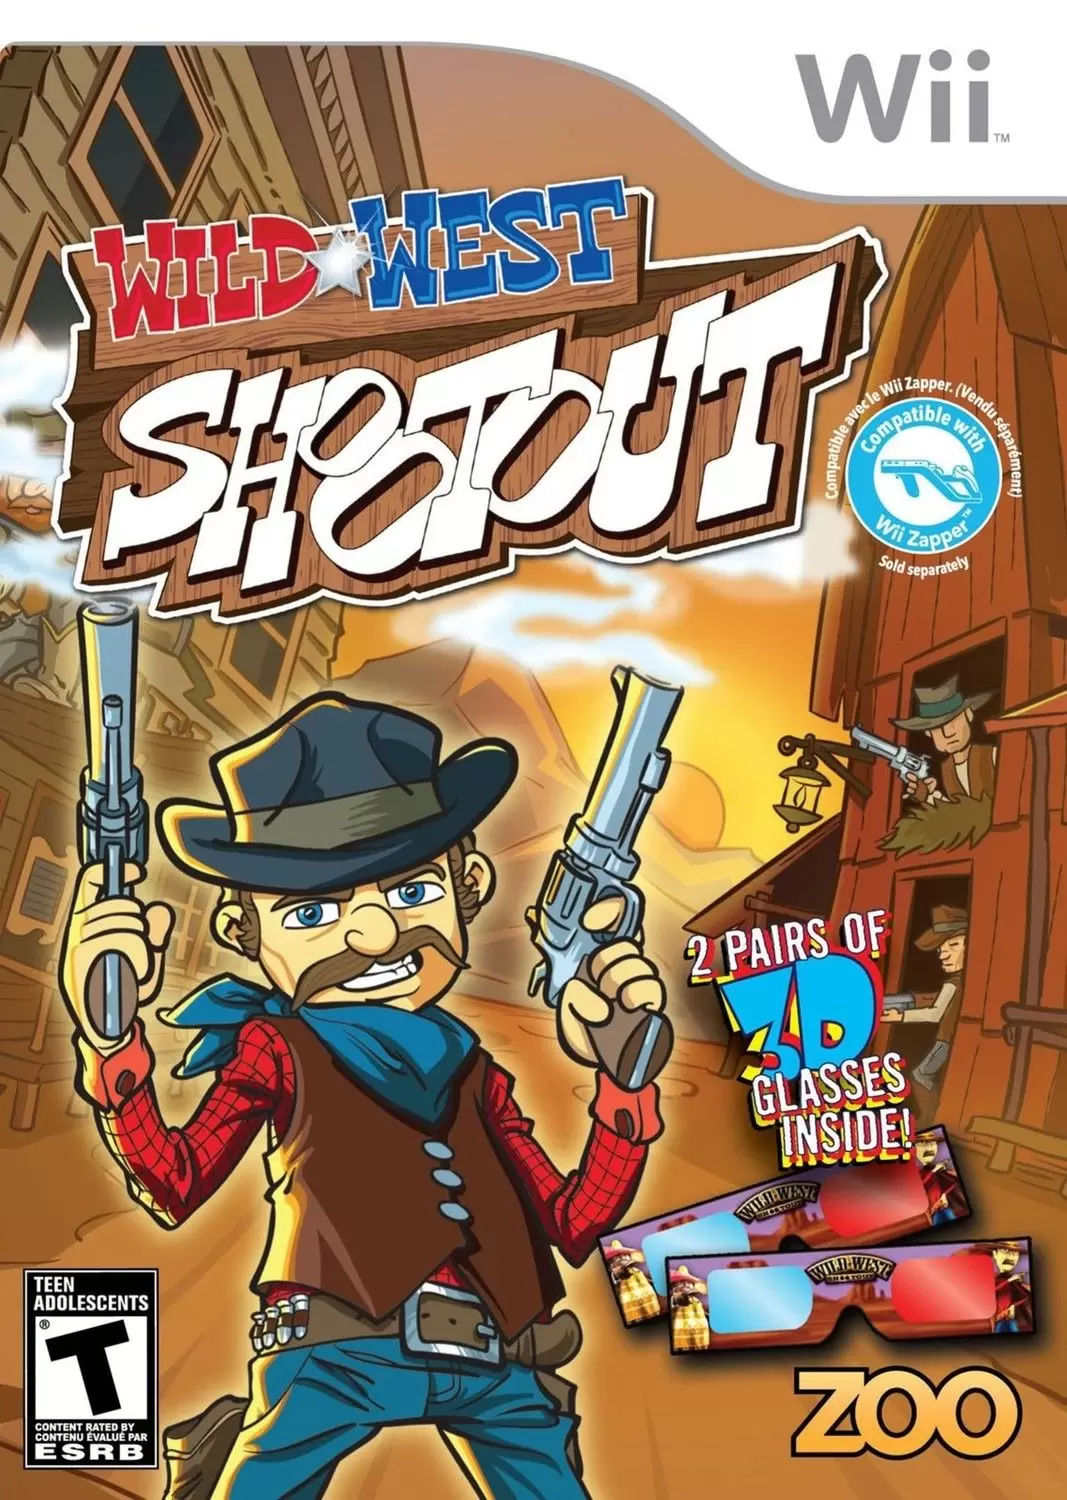 Nintendo Wii Games - Wild West Shootout